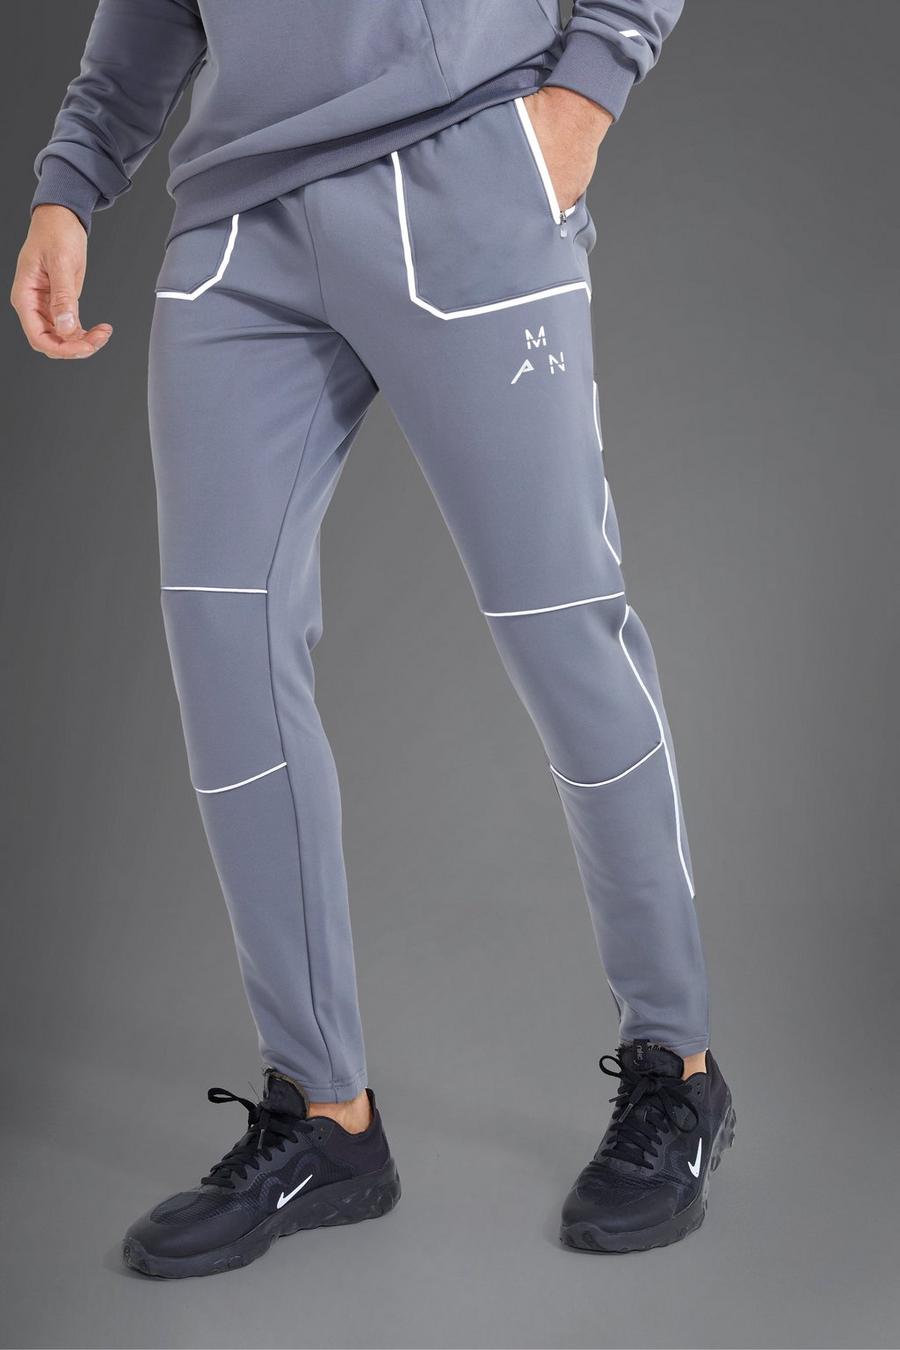 Pantaloni tuta Man Active Gym per alta performance riflettenti, Charcoal gris